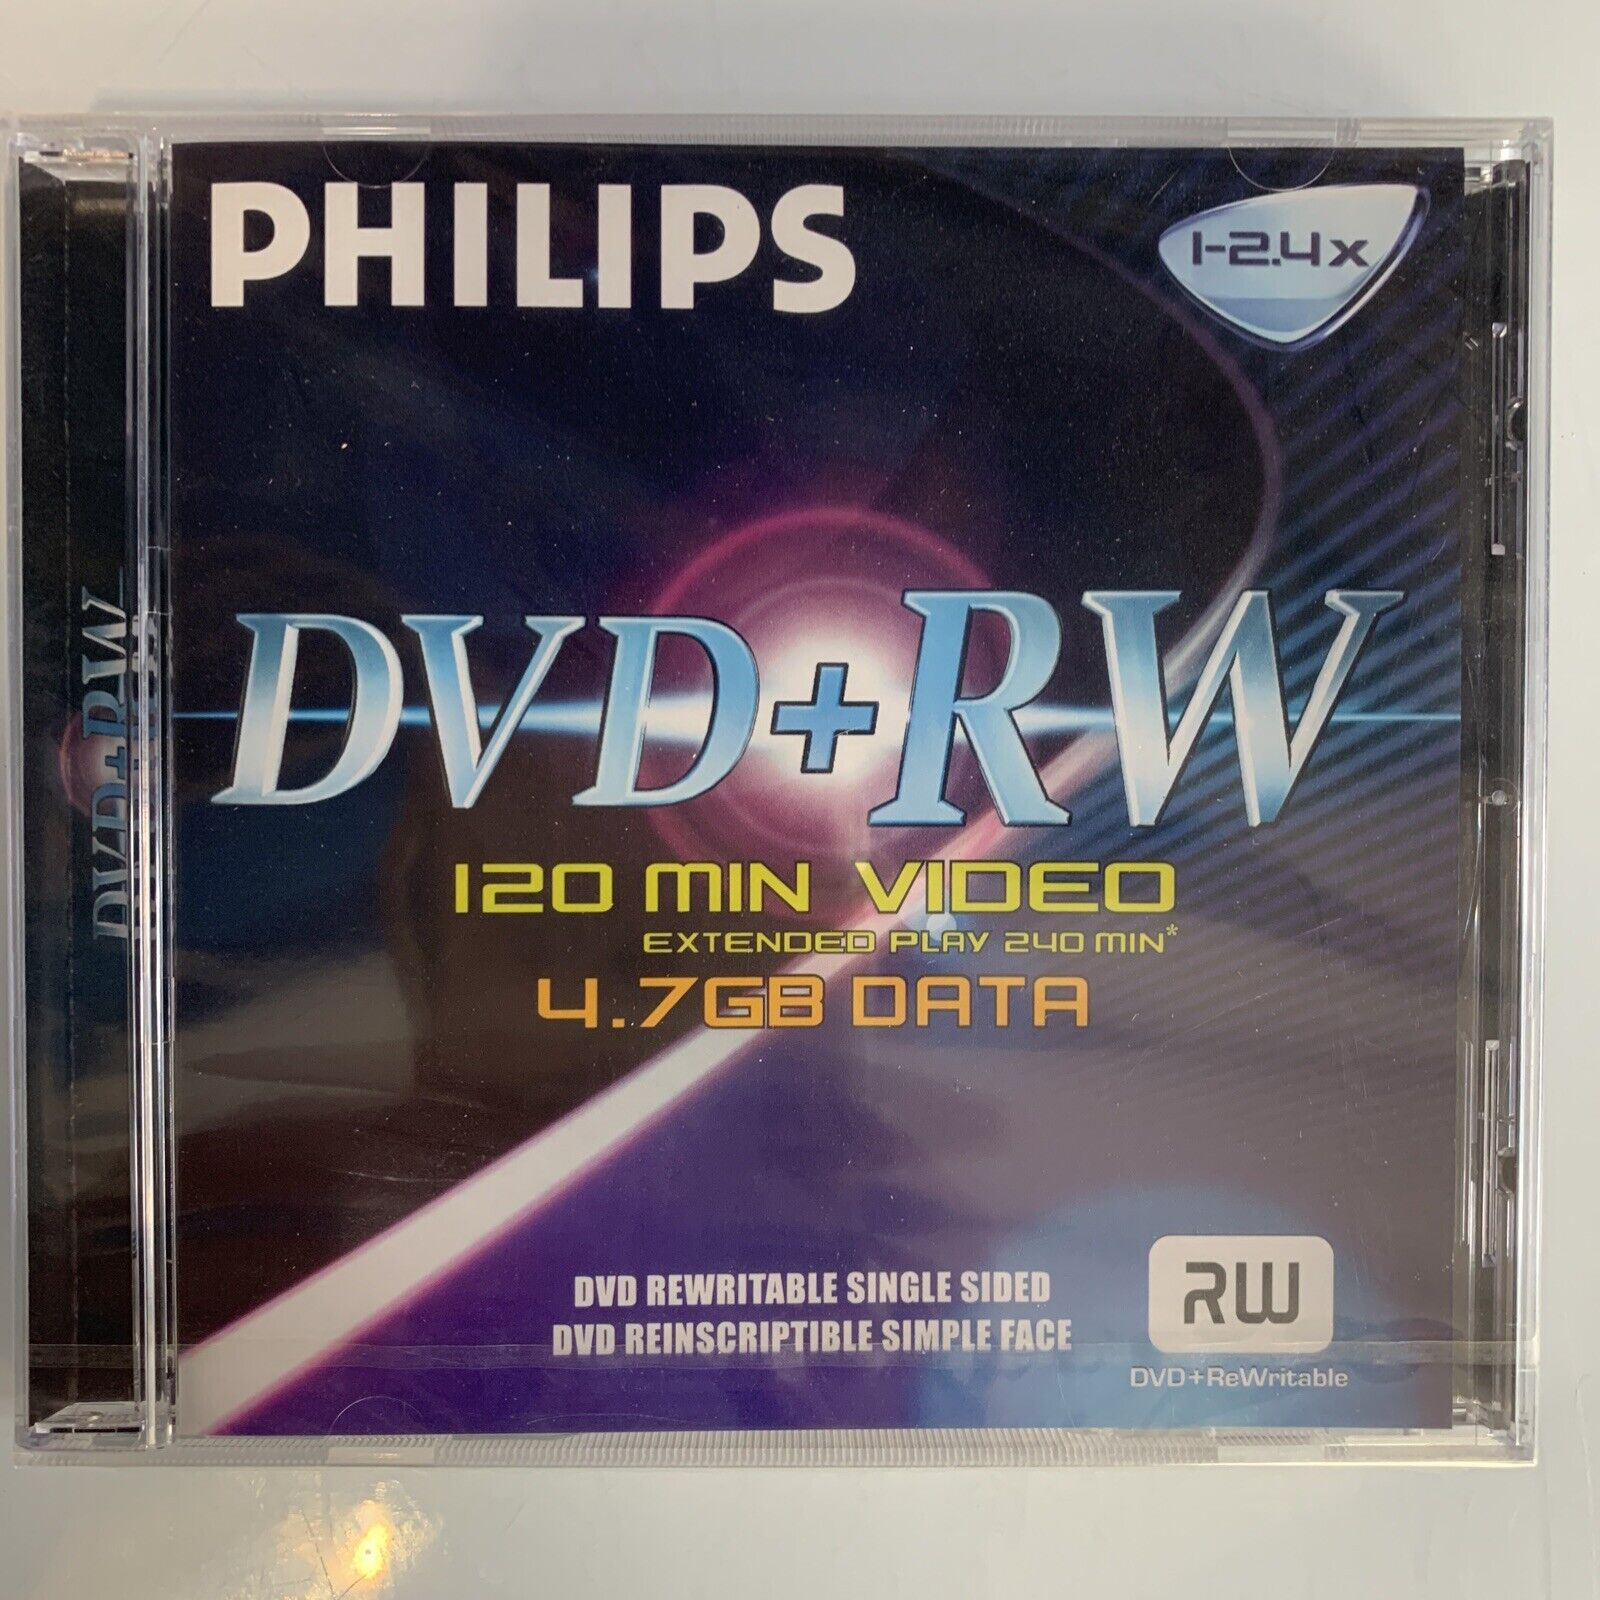 Philips DVD+RW 120 Min 4.7 GB New Sealed